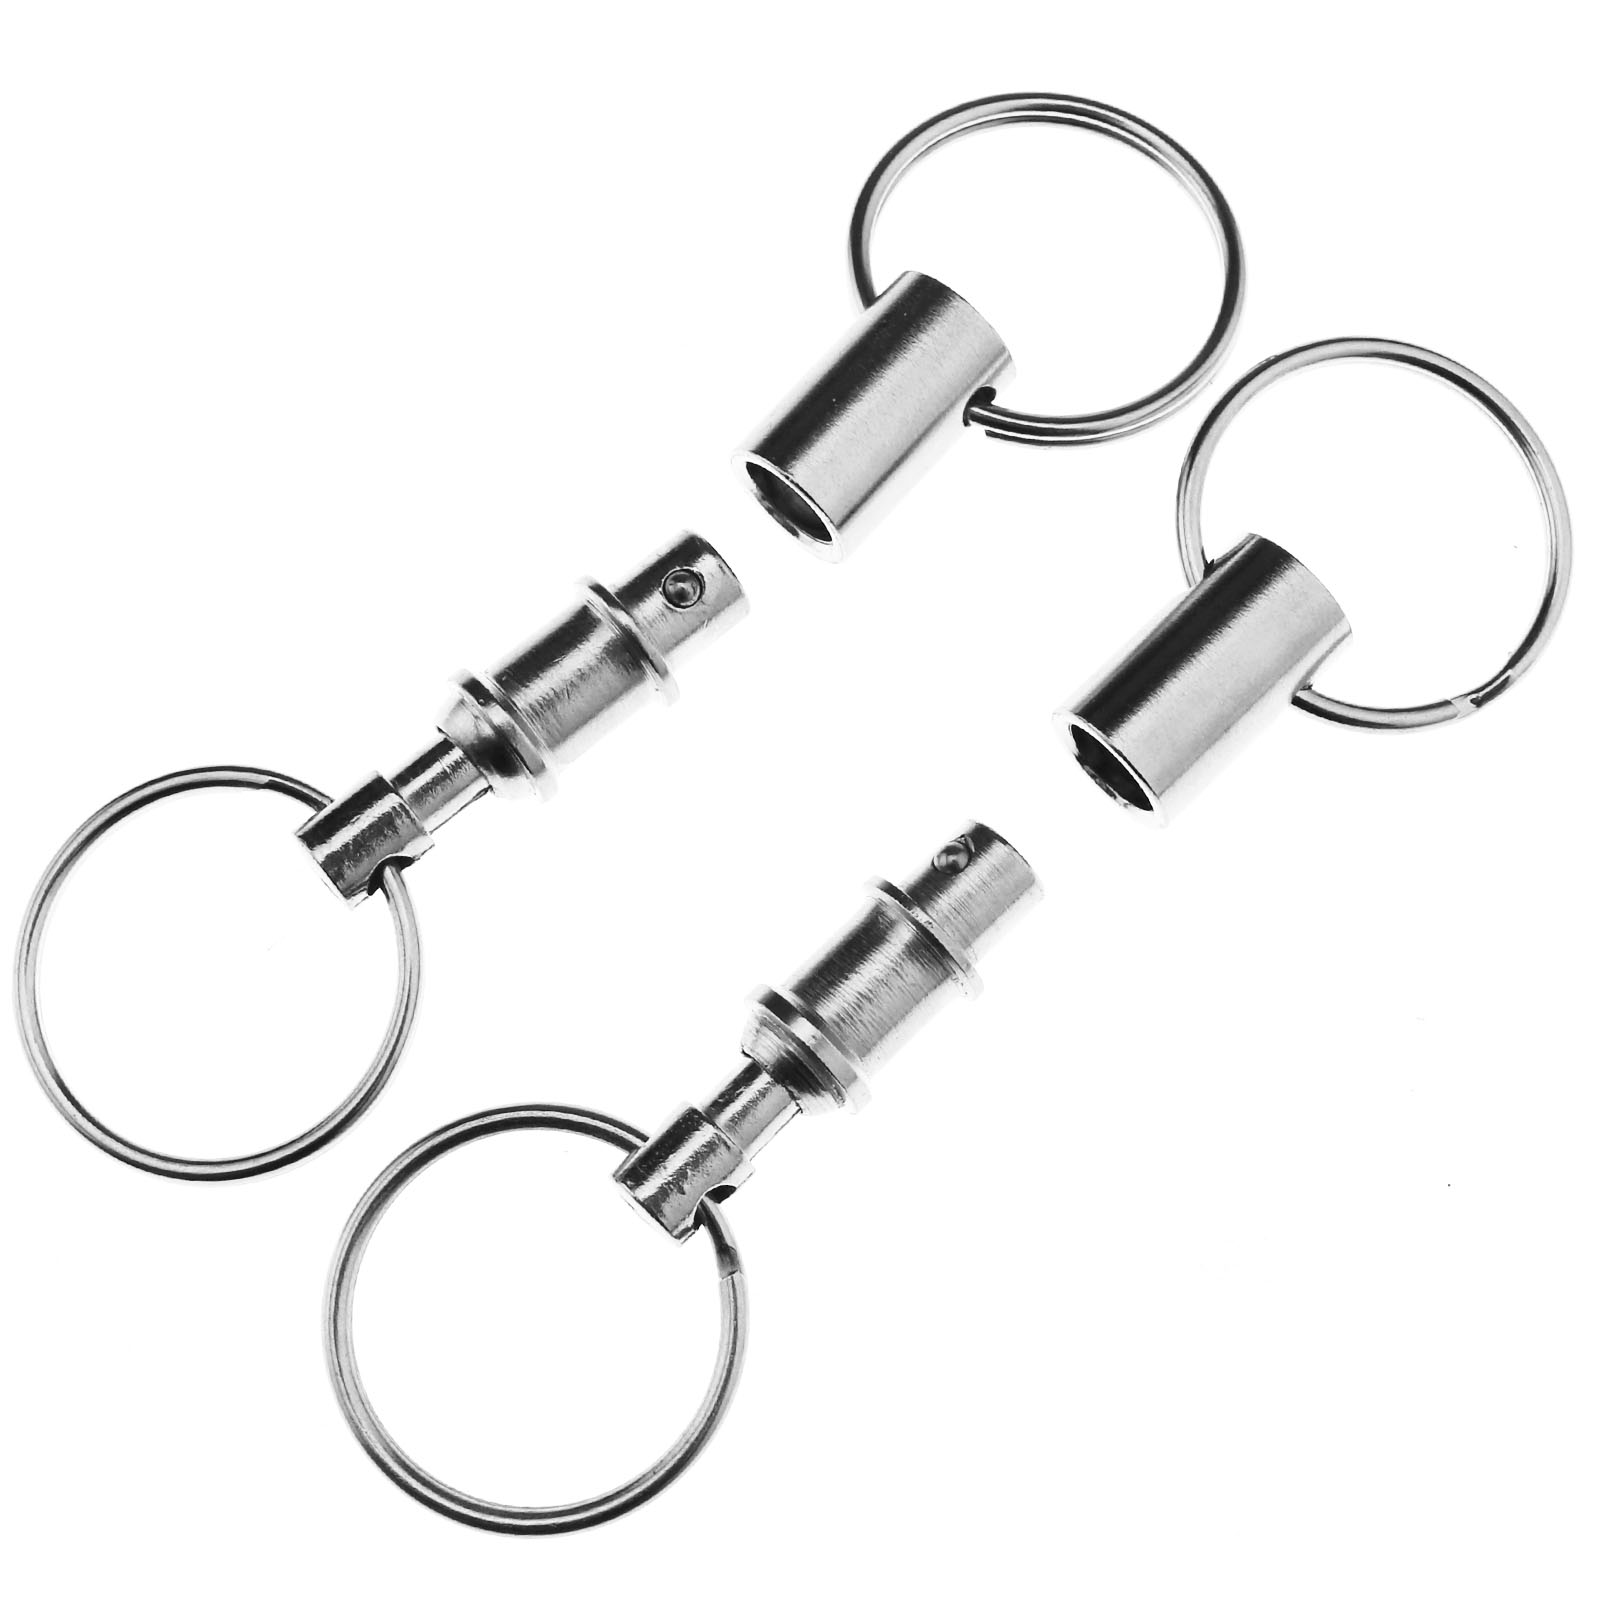 3 x Removable Detachable Handy Key Ring Chain Holder Split Clip Fob ...